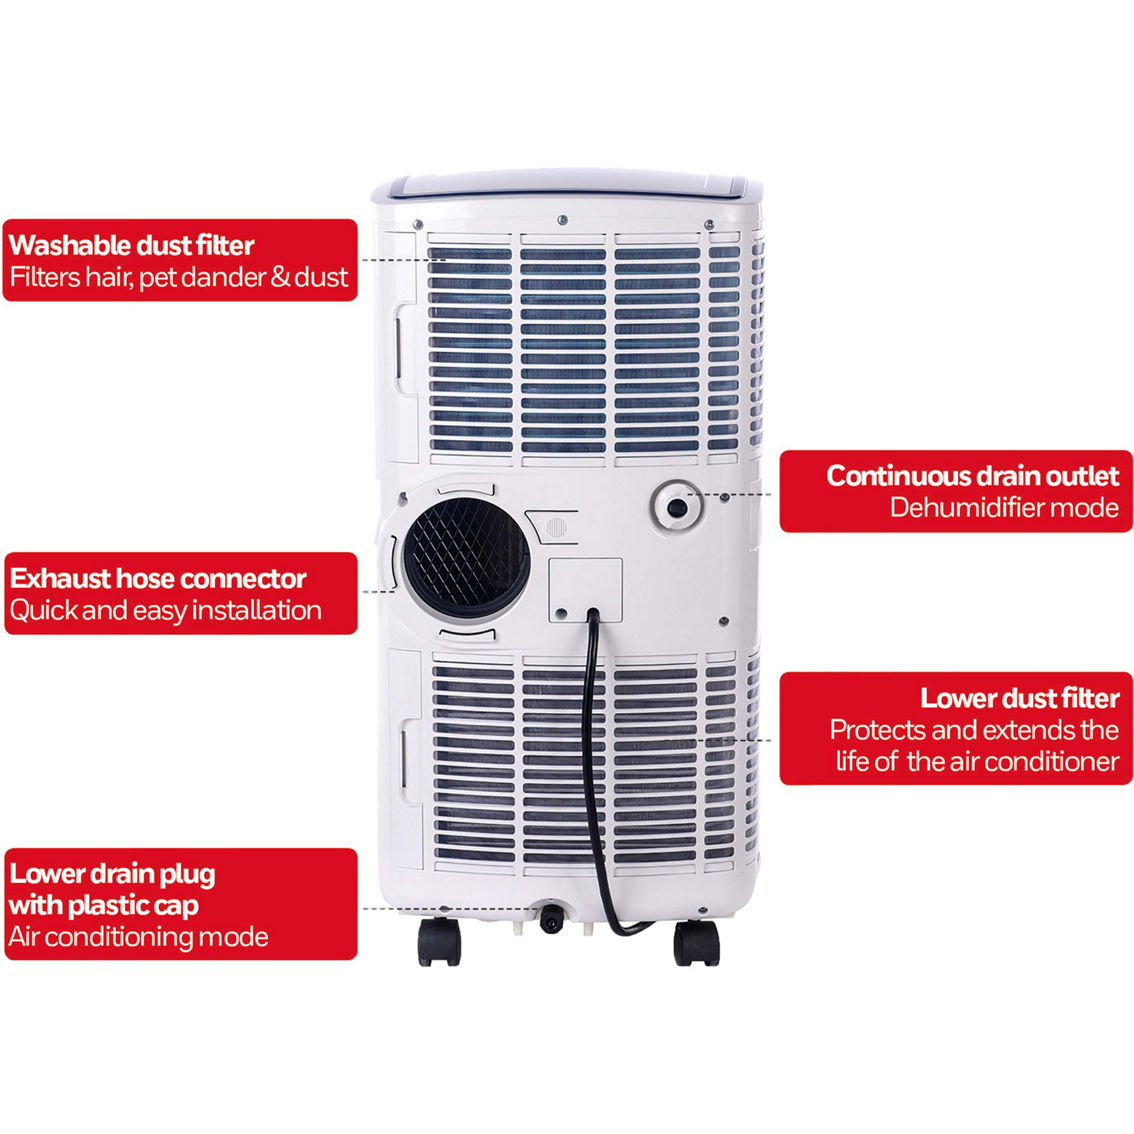 Honeywell 9,100 BTU (ASHRAE)/6,100 BTU (SACC) Portable Air Conditioner, White/Blue - Image 4 of 7